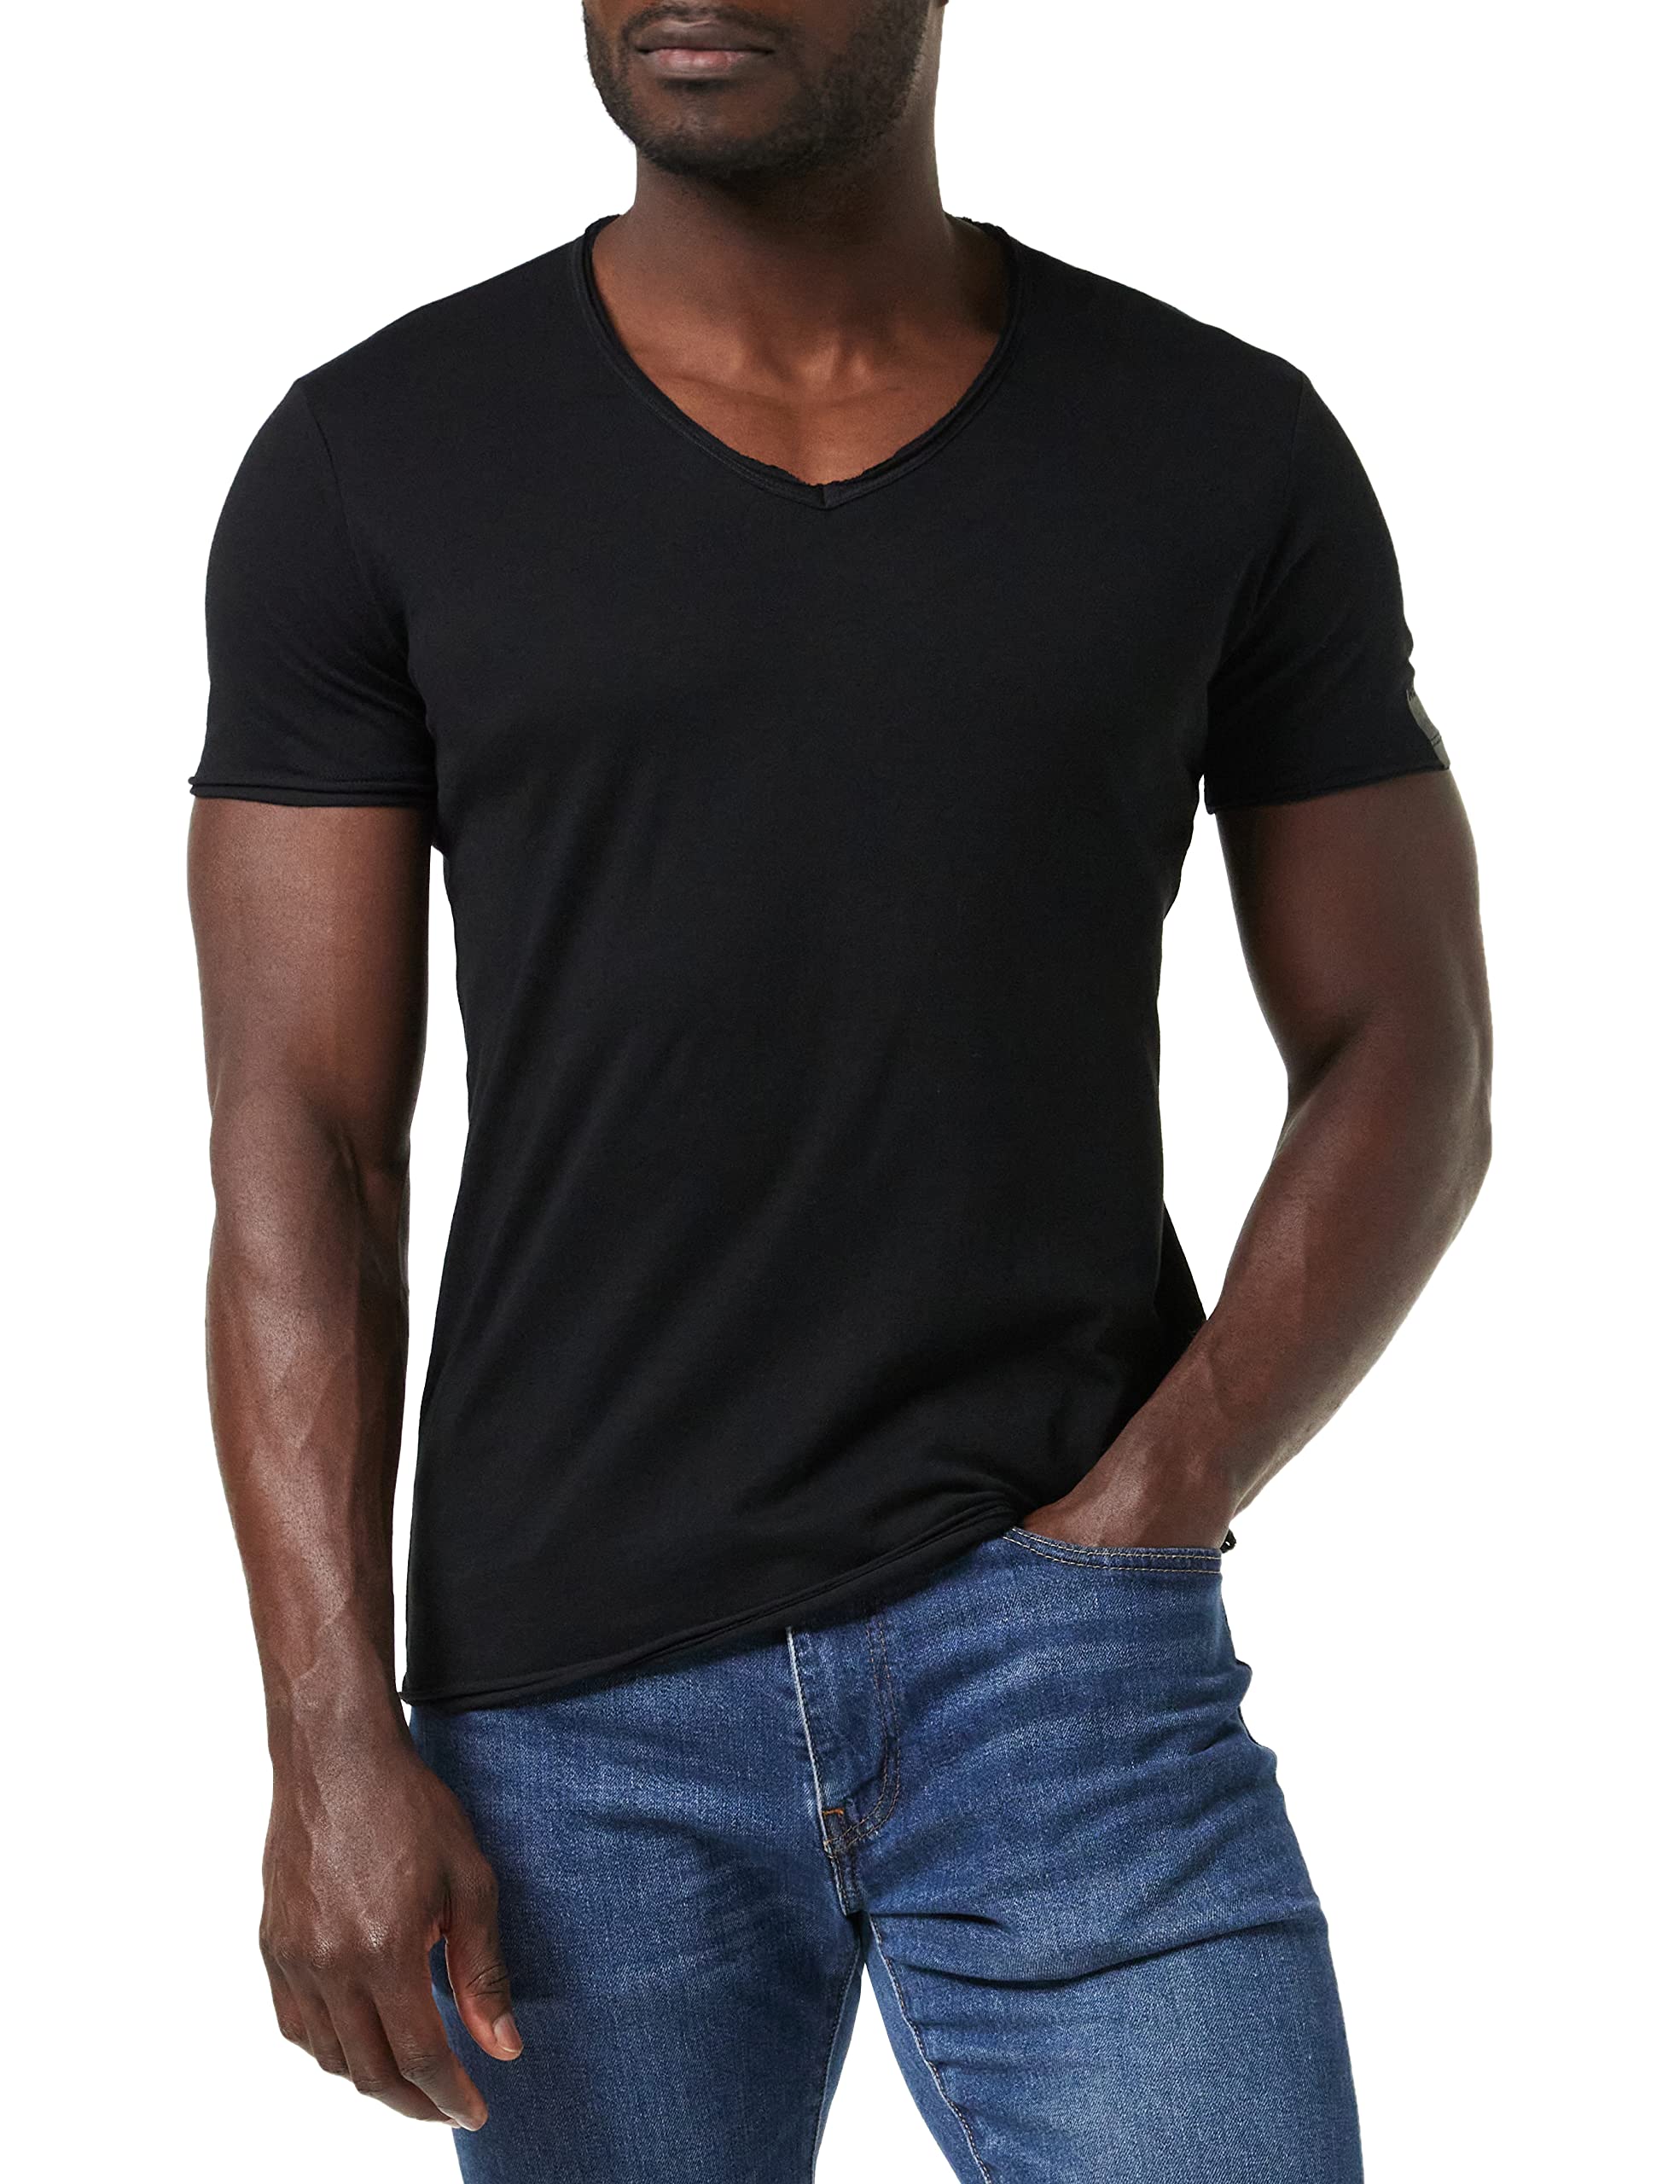 Replay Herren T-Shirt Kurzarm mit V-Neck Ausschnitt, Schwarz (Black 098), XXL